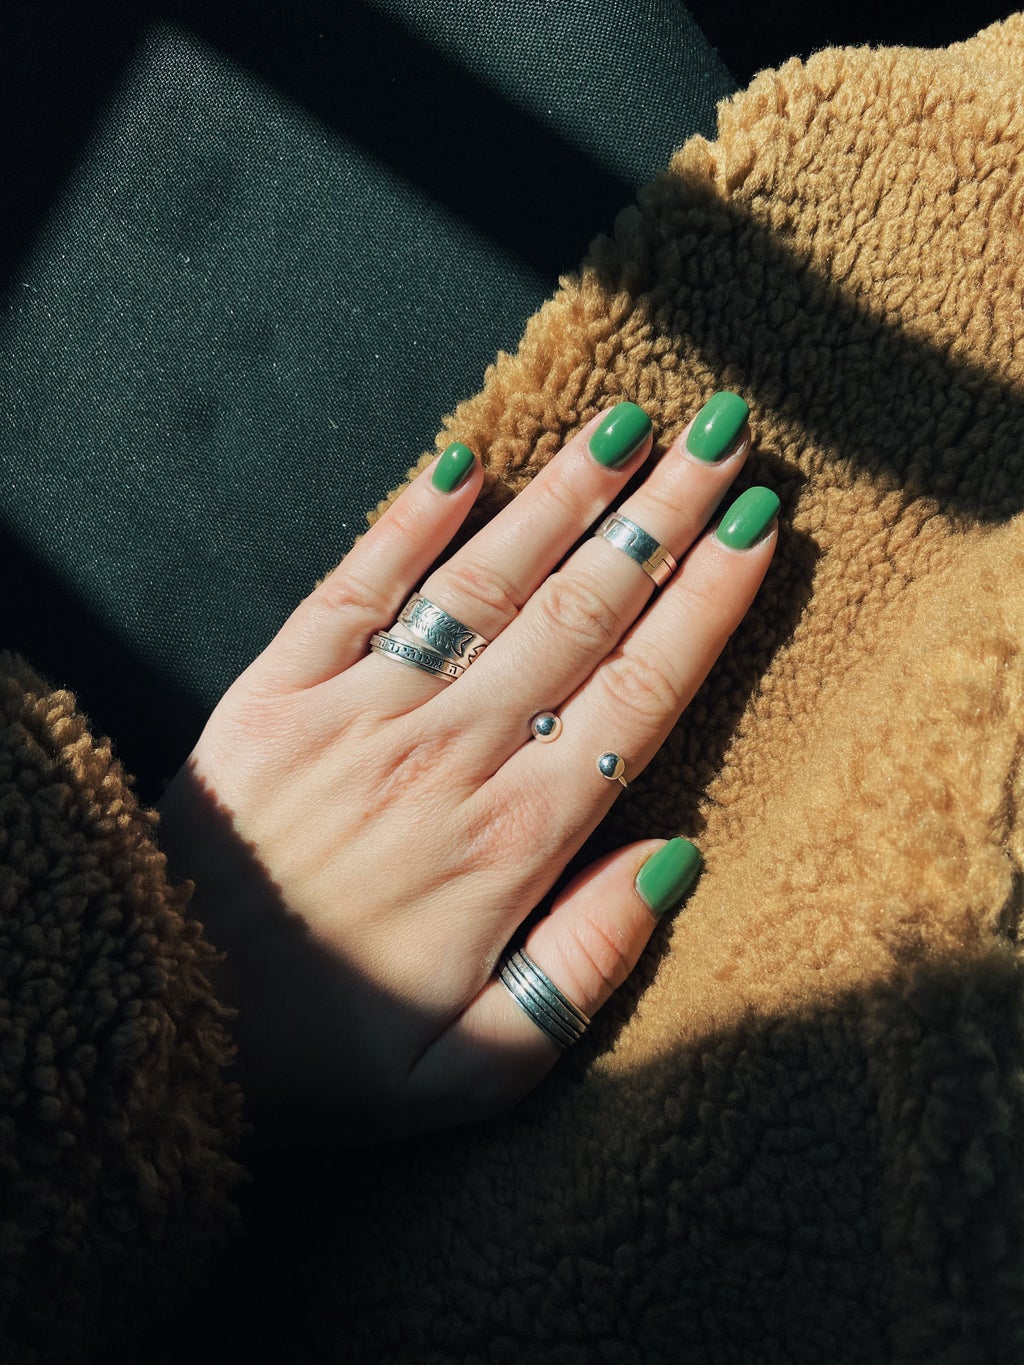 Green nails and rings